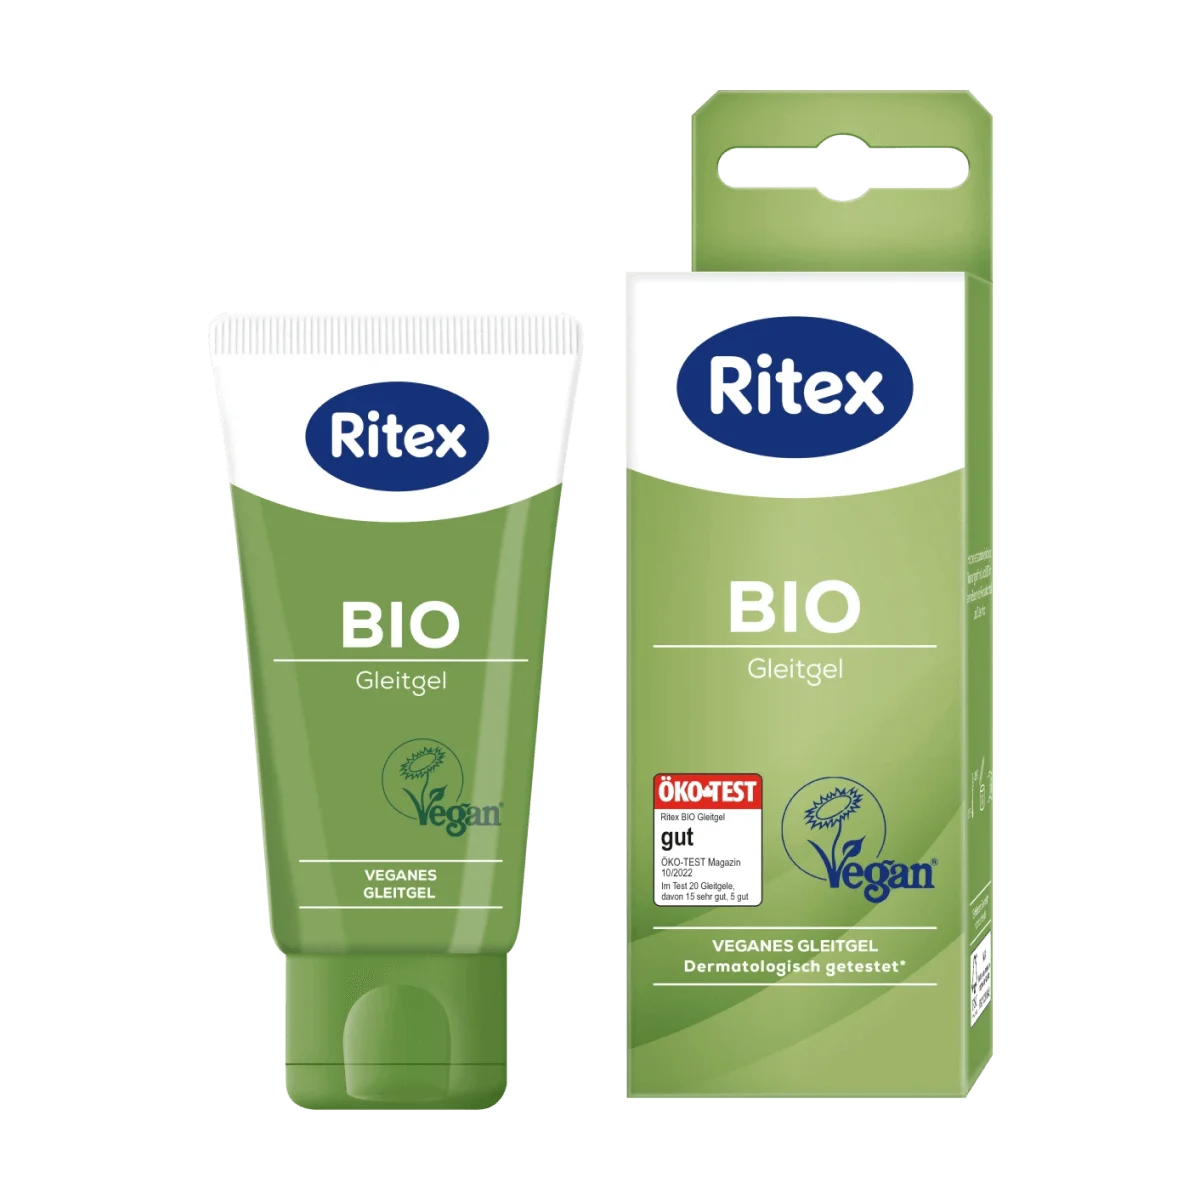 Ritex BIO Gleitgel, 50 ml